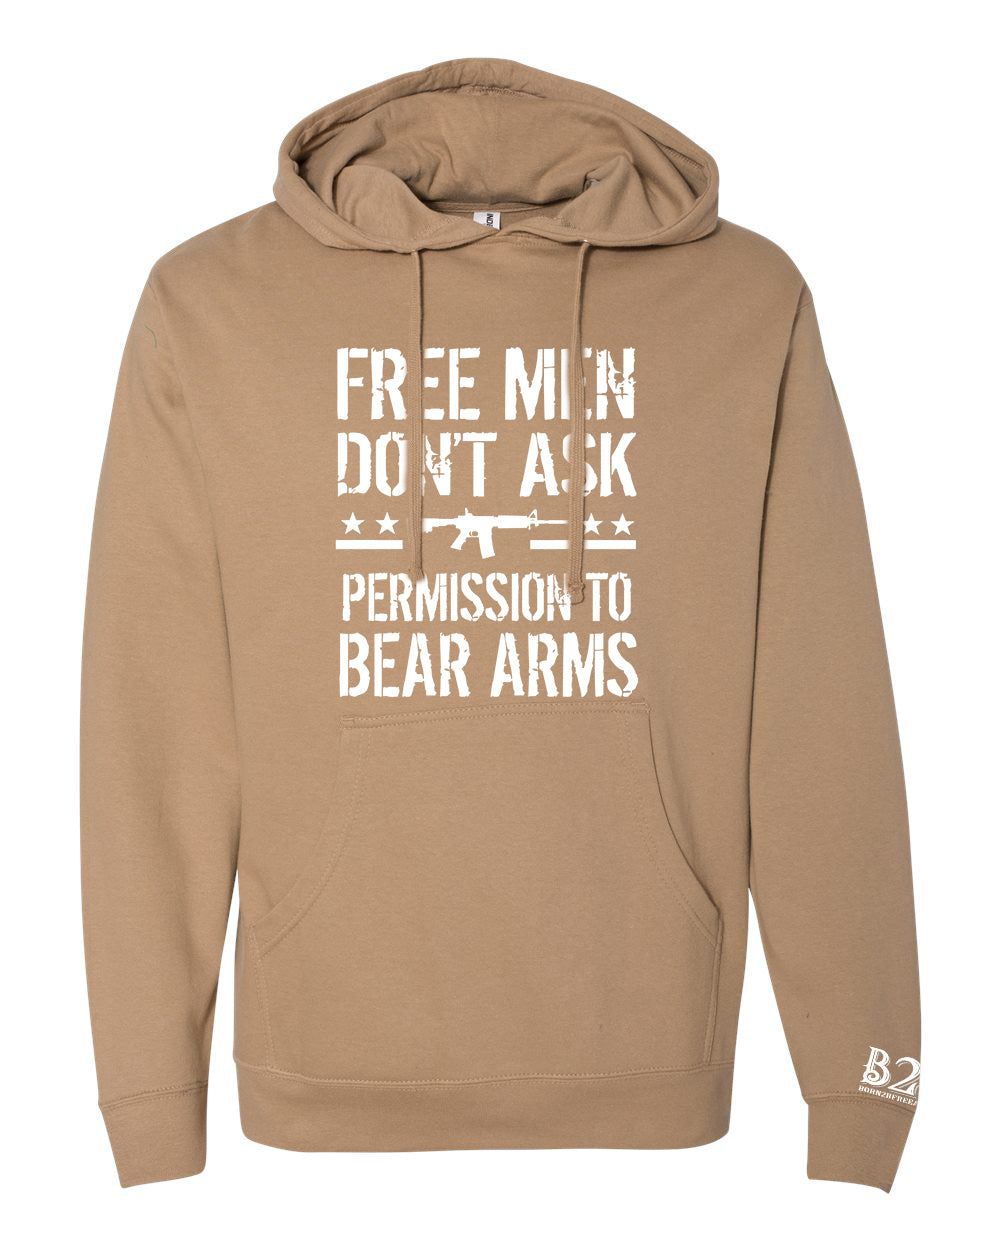 Free Men Don't Ask Permission